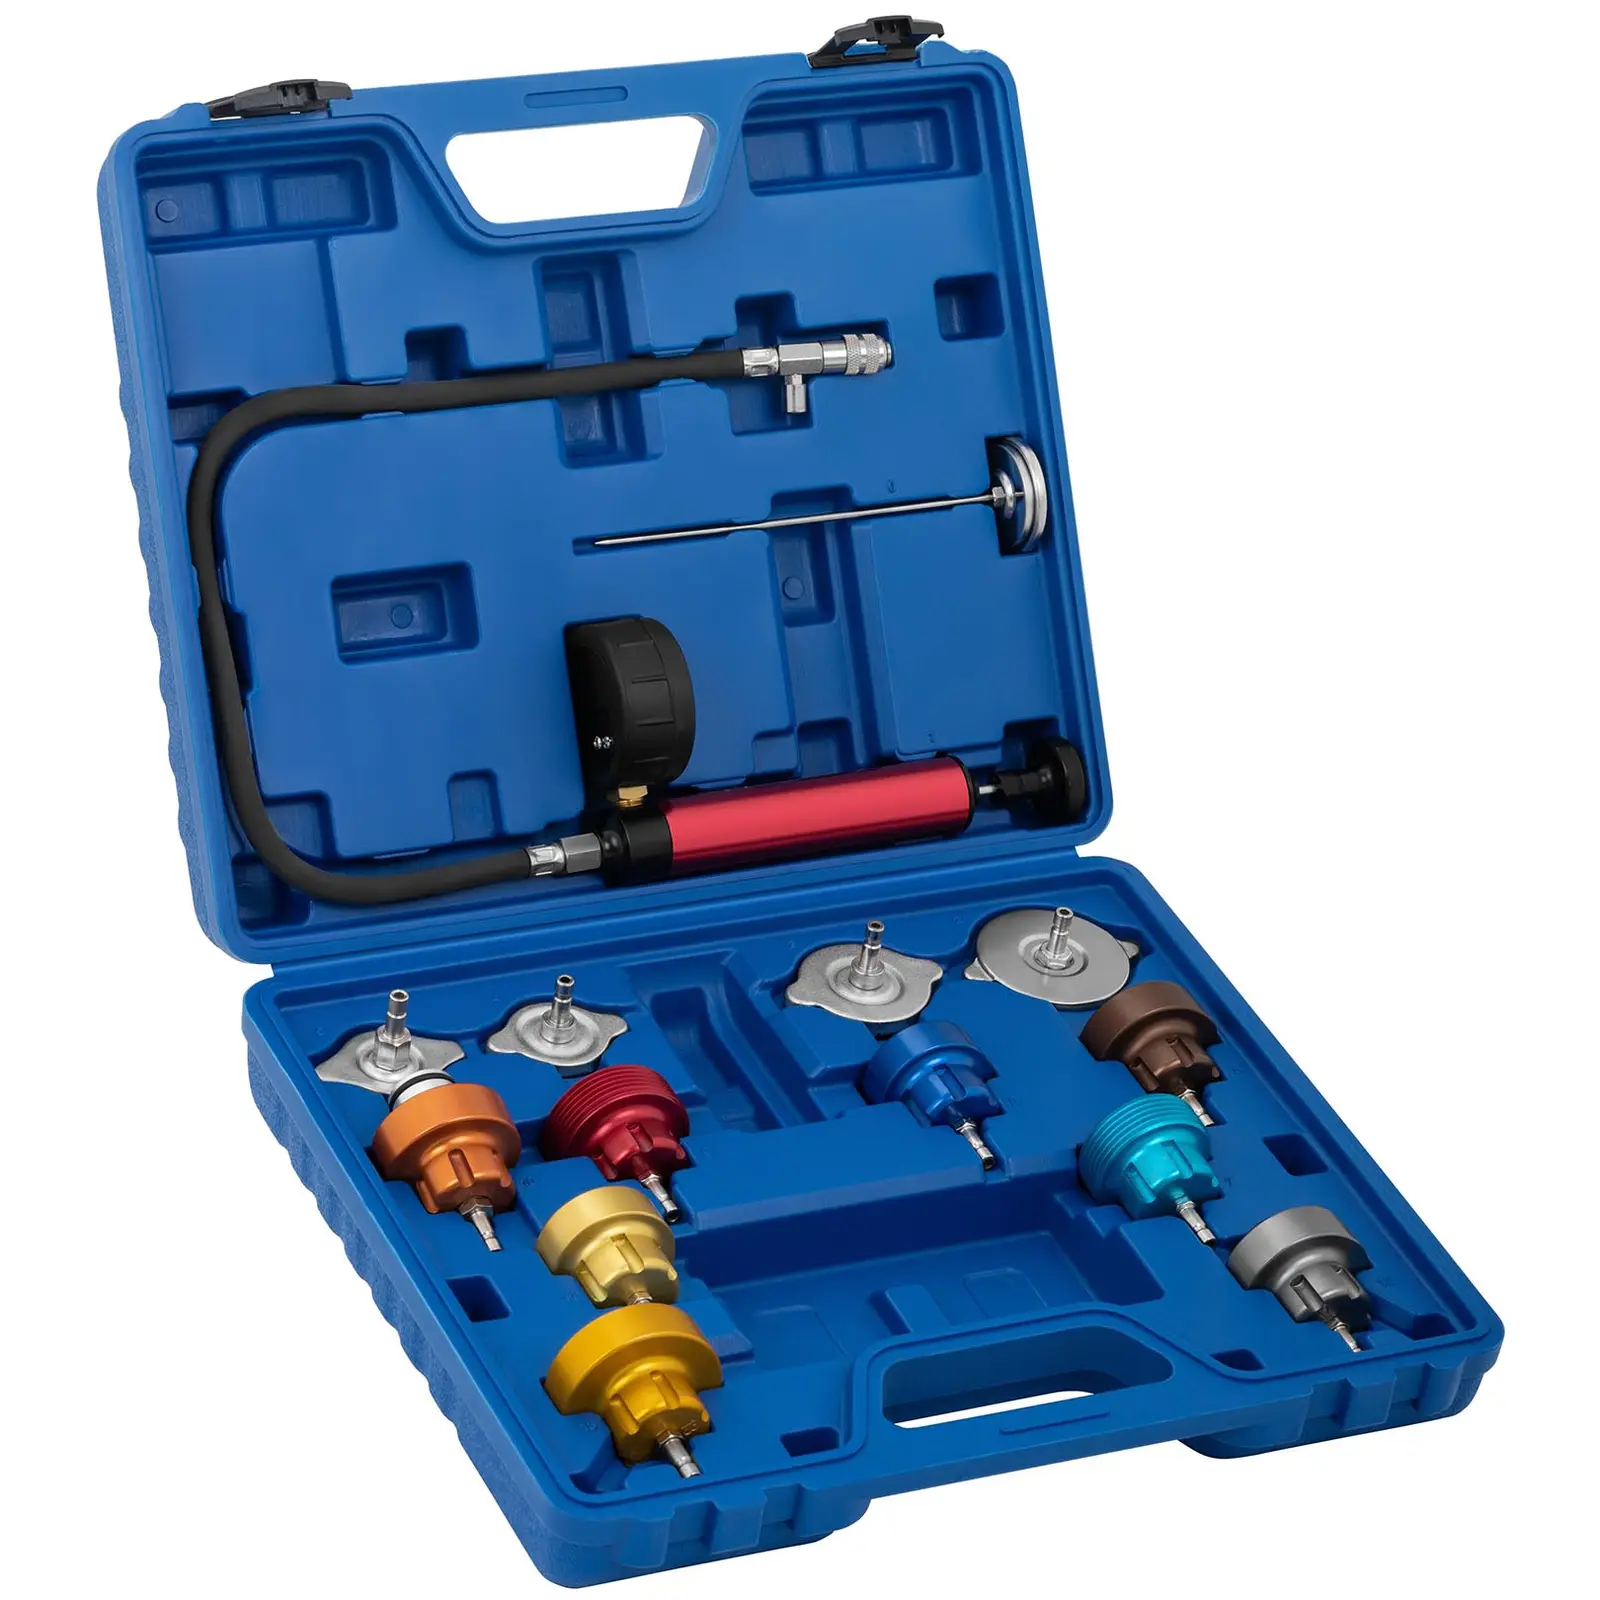 Radiator Pressure Test Kit - 14 pcs. - 0-2.5 bar